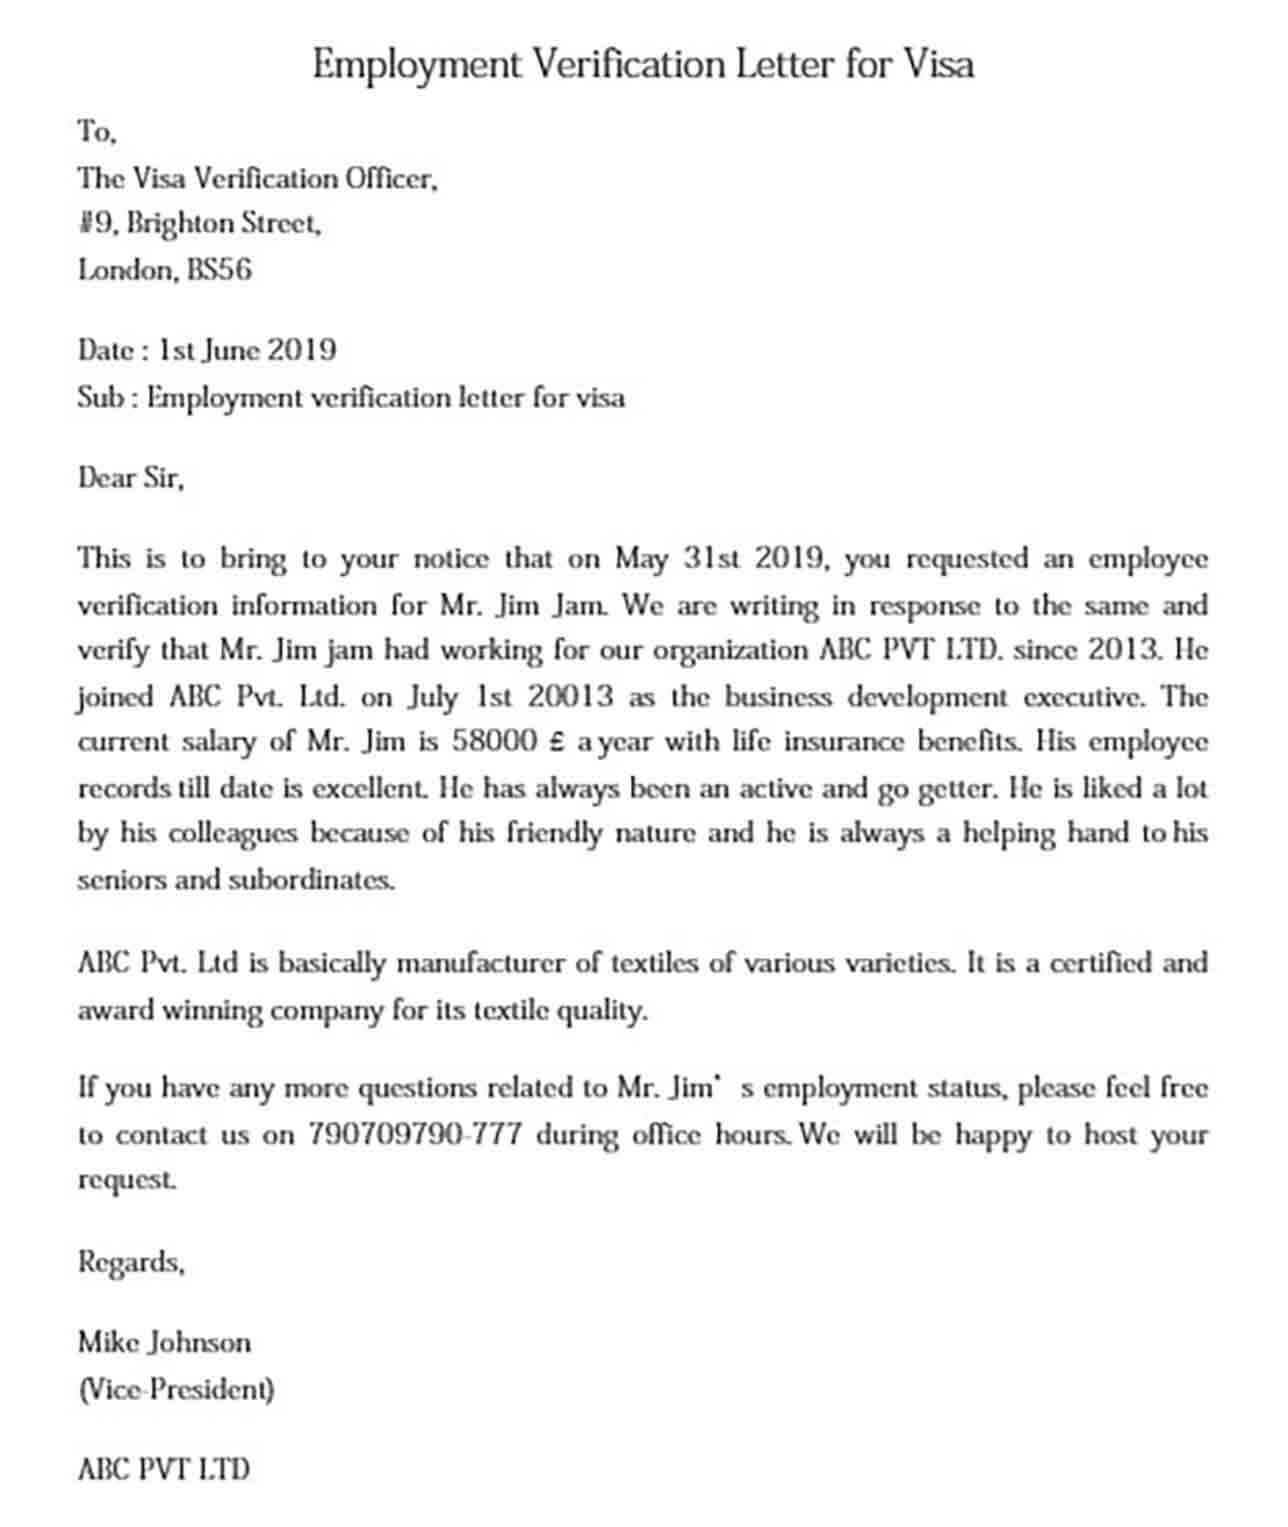 Employment Verification Letter for Visa